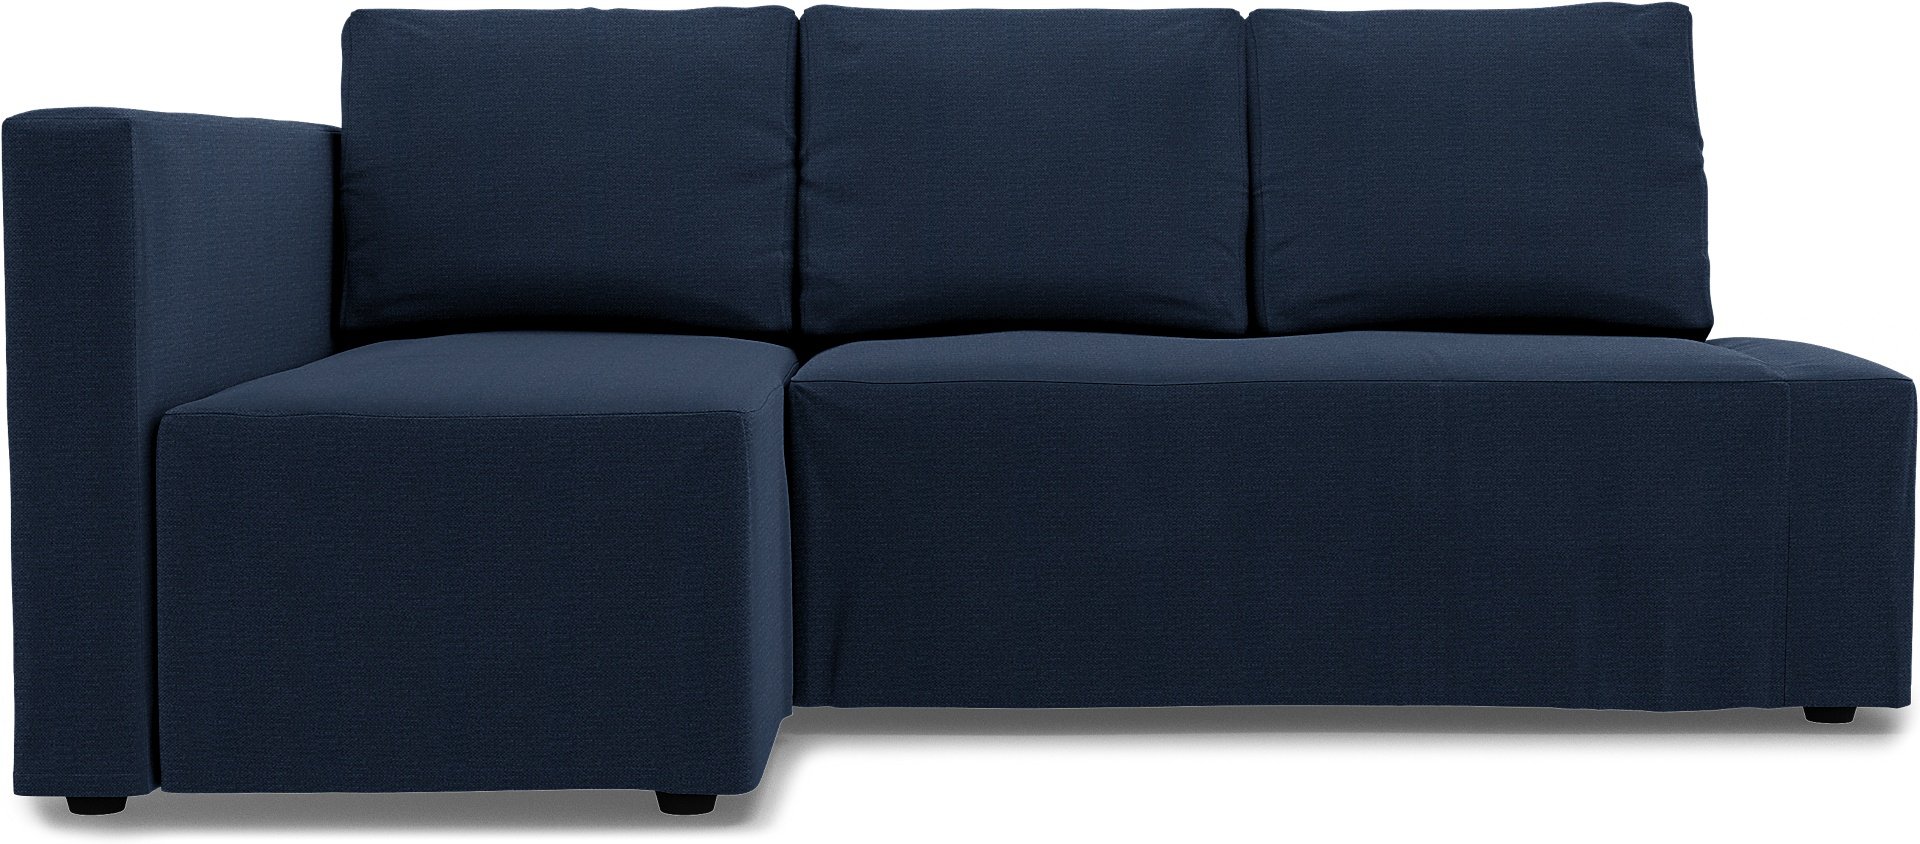 IKEA - Friheten Sofa Bed with Left Chaise Cover, Navy Blue, Linen - Bemz